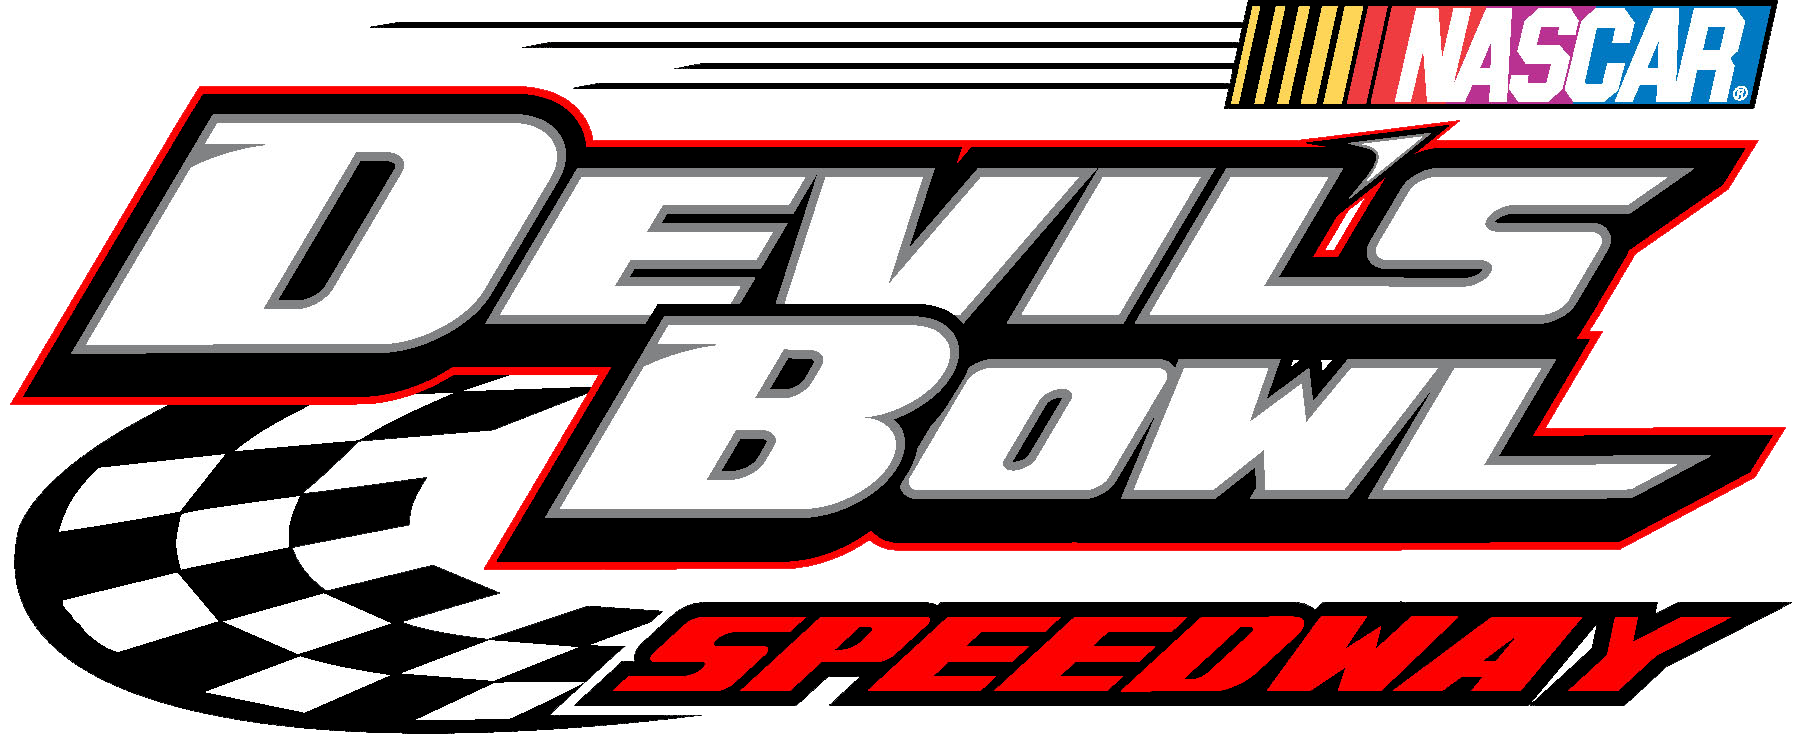 Devil's Bowl Speedway